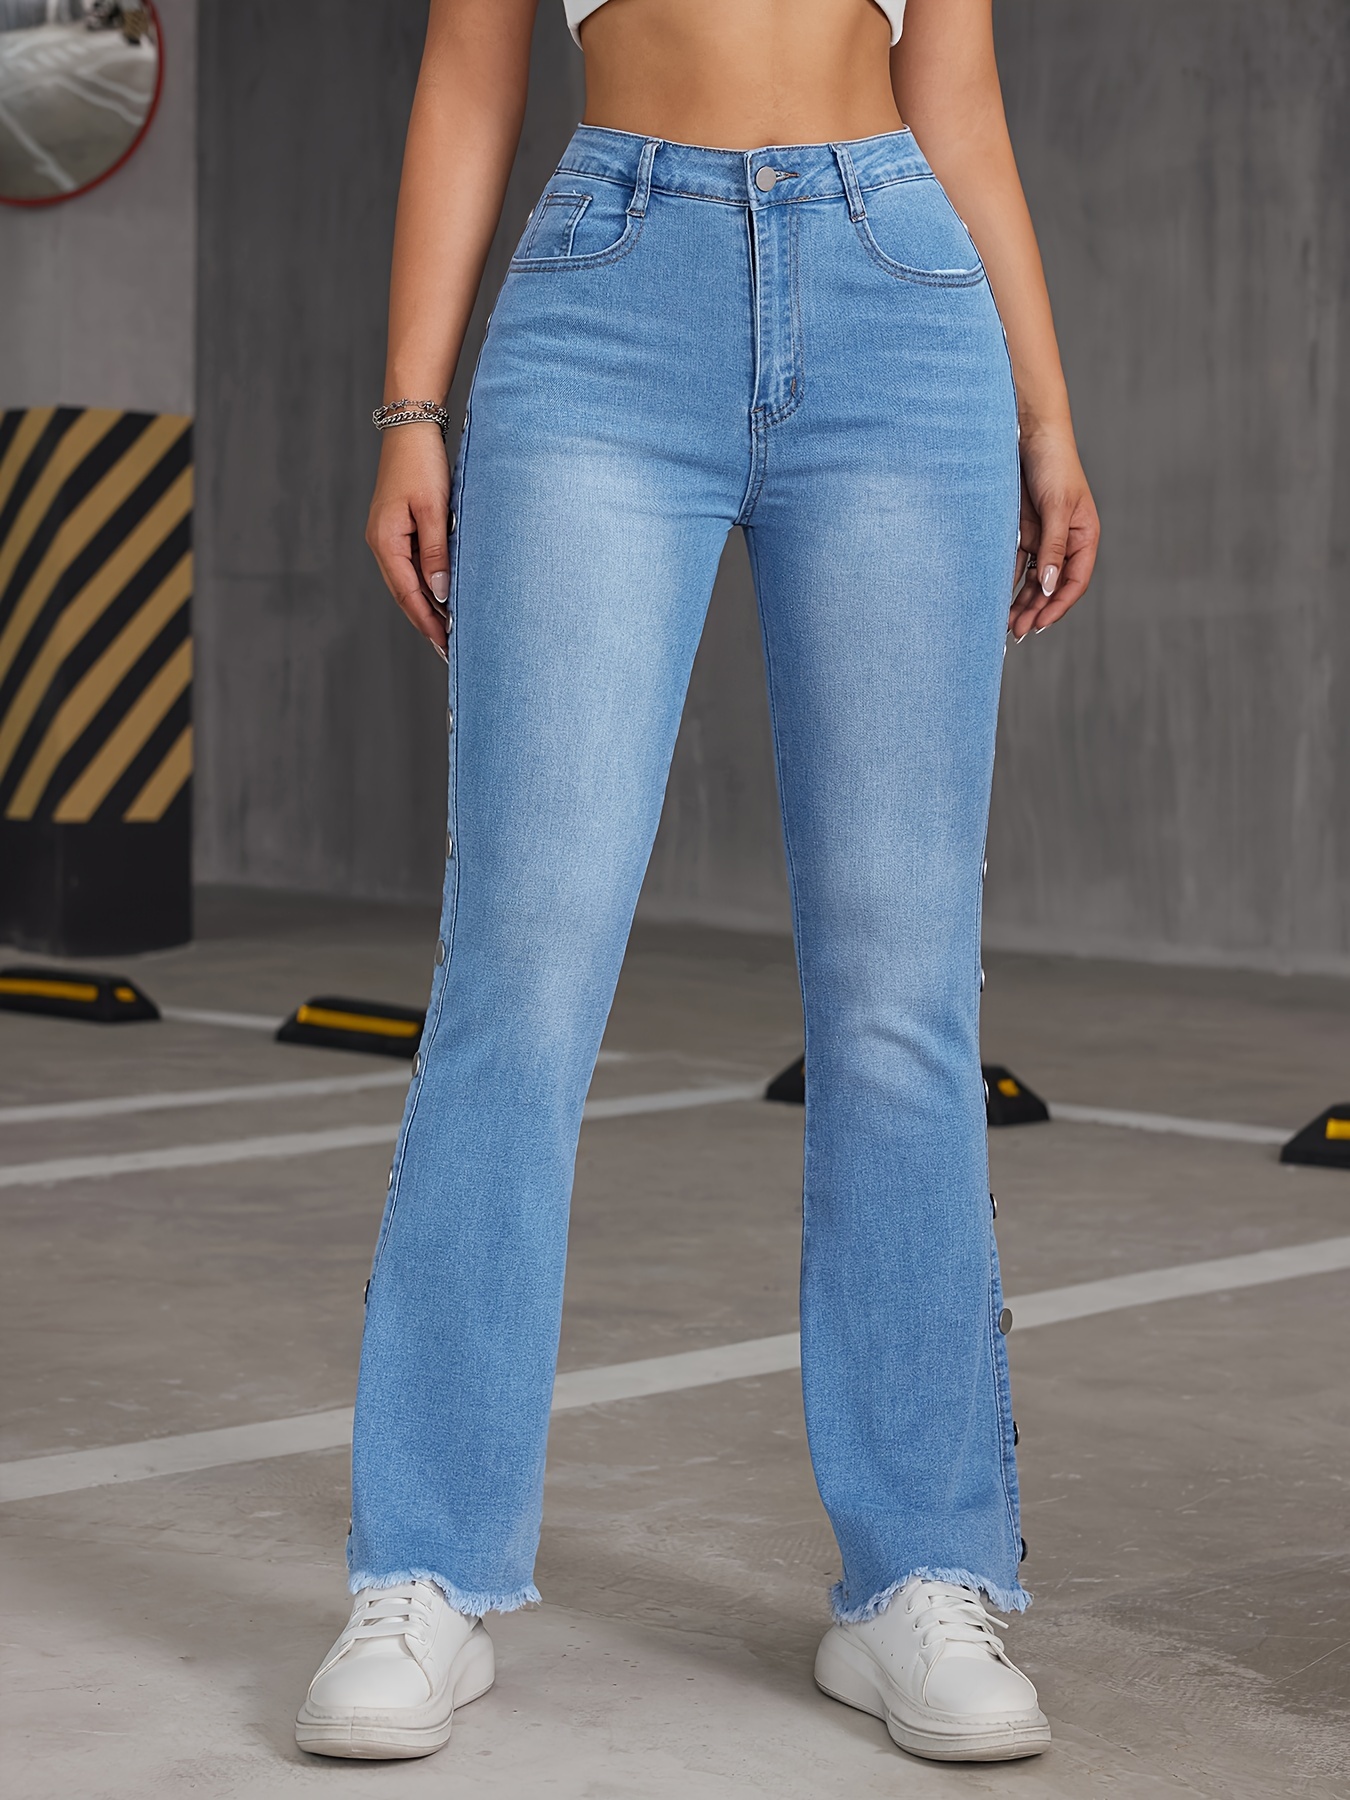 Blue Studded Decor Flare Jeans * Hem High-Stretch Bell Bottom Jeans,  Women's Denim Jeans & Clothing